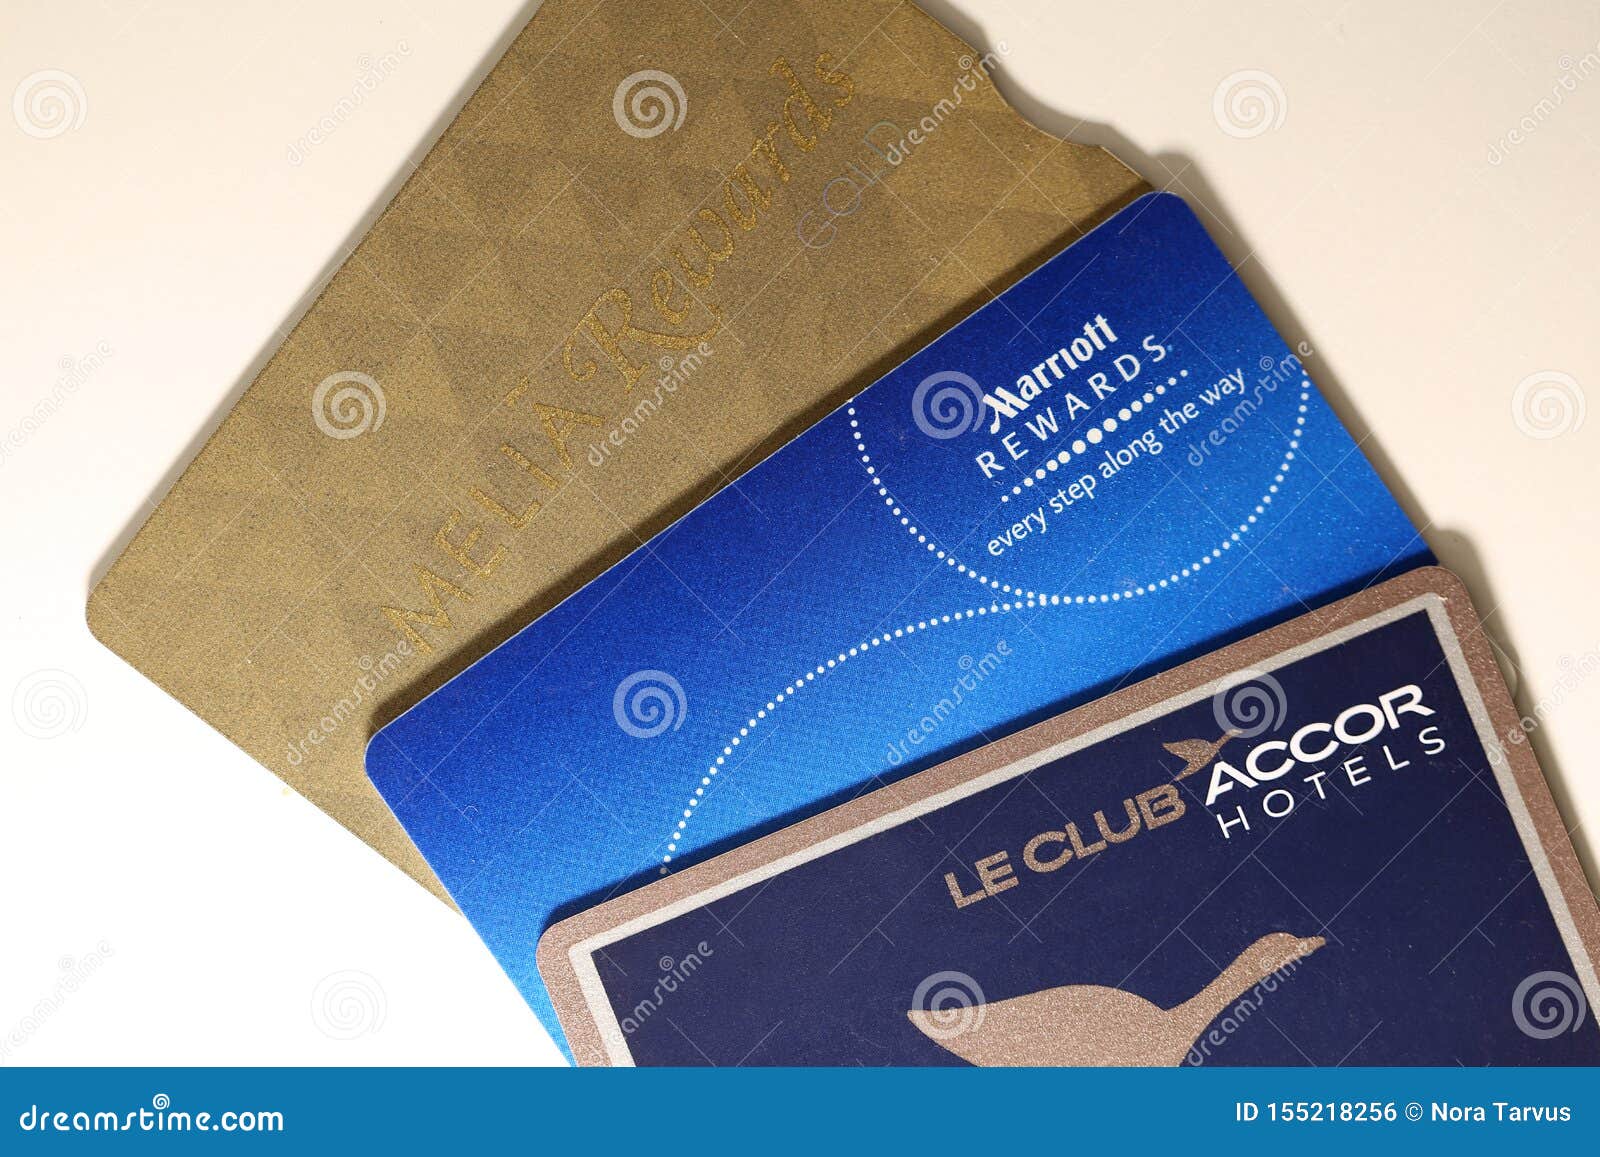 Hotel Membership Rewards Cards: Marriott Rewards Card, Melia Rewards Gold Card, Le Club Accor ...